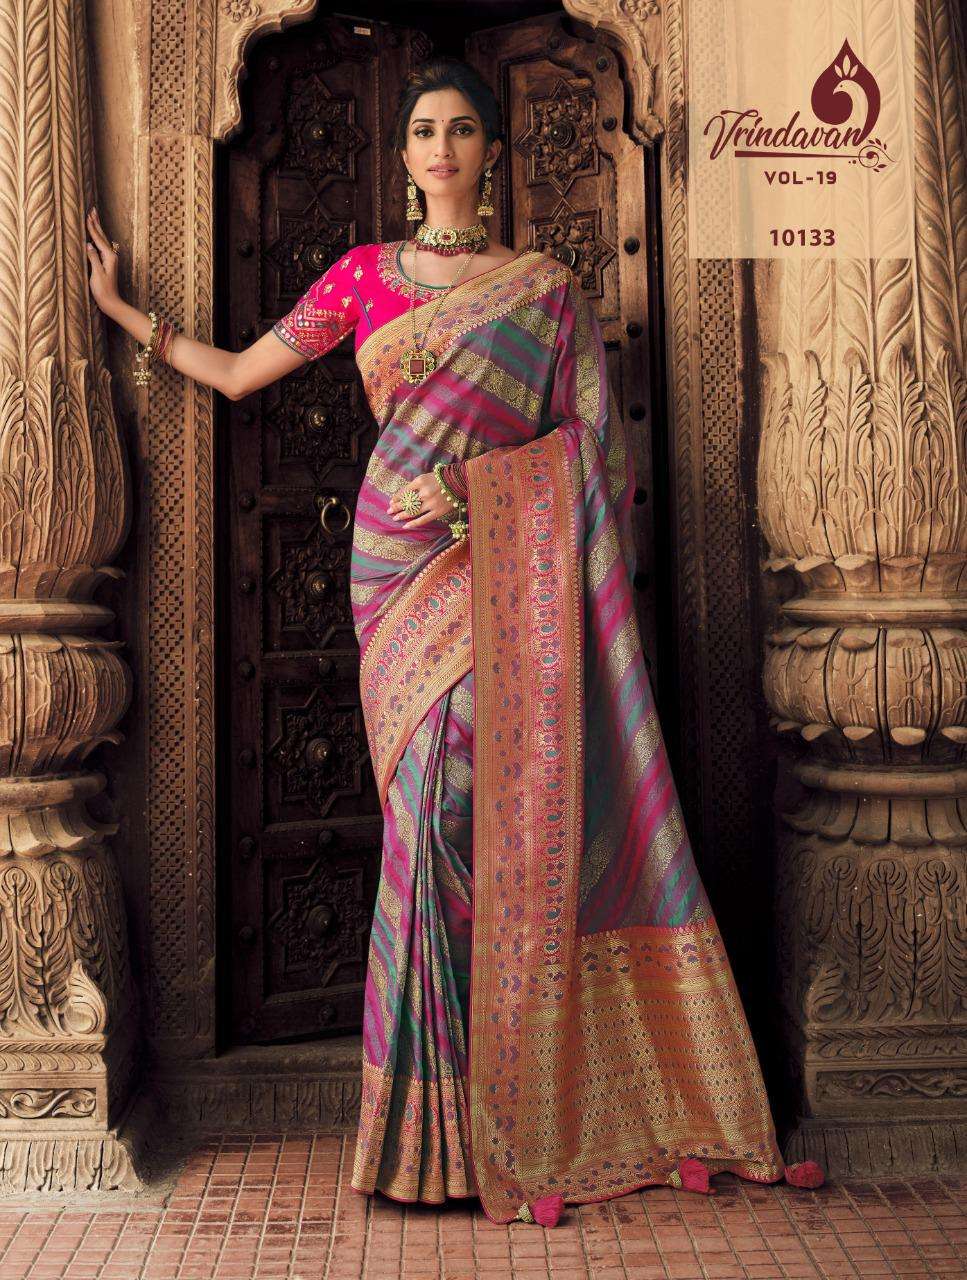 Royal vrindavan vol 19 silk designer saree collection